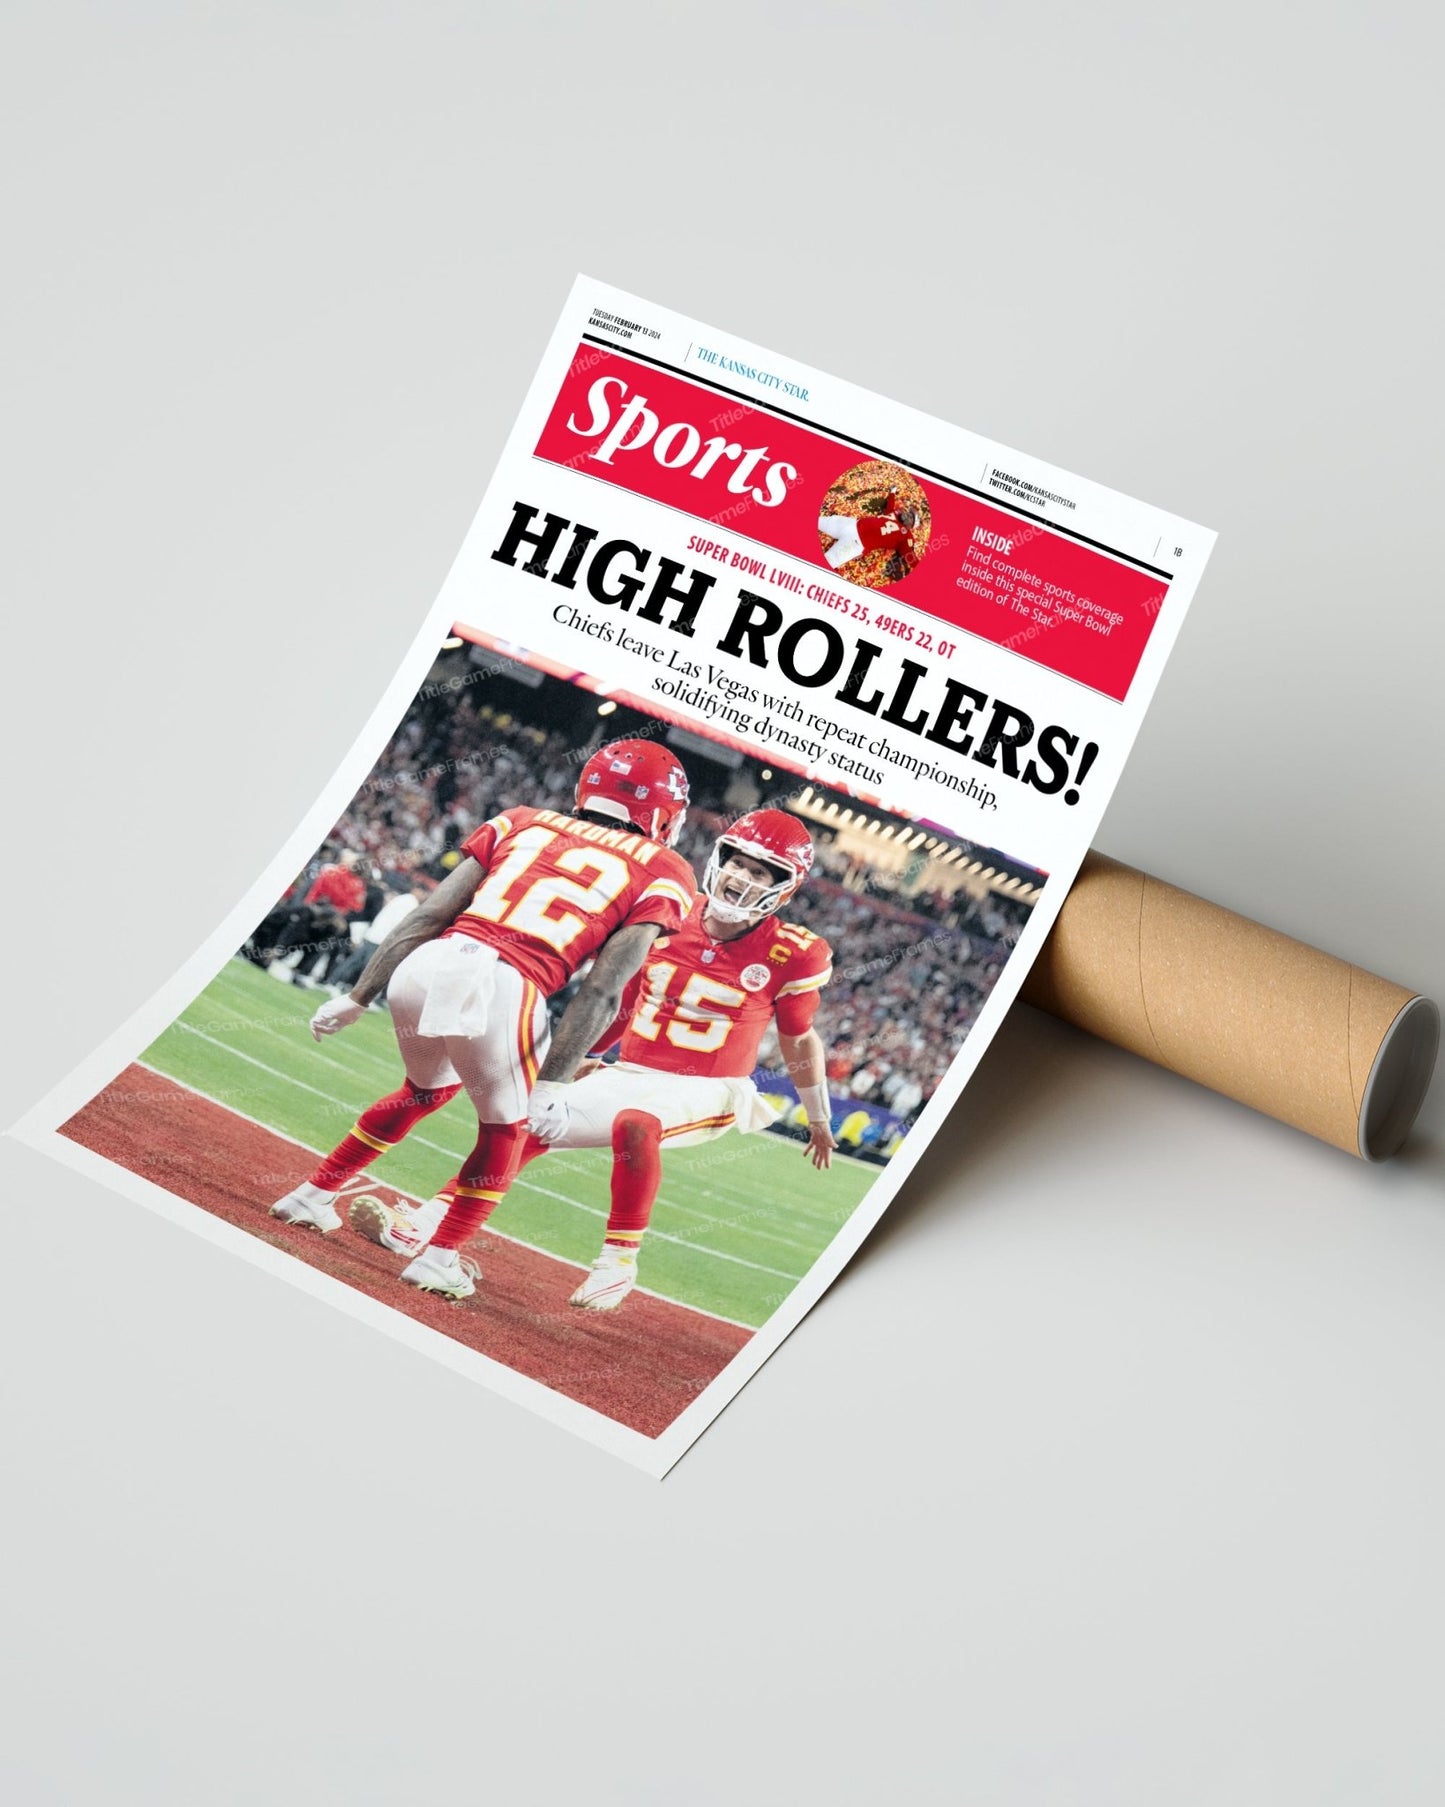 2024 Kansas City Chiefs Super Bowl LVIII Champions 'HIGH ROLLERS!' Framed Newspaper Print - Title Game Frames